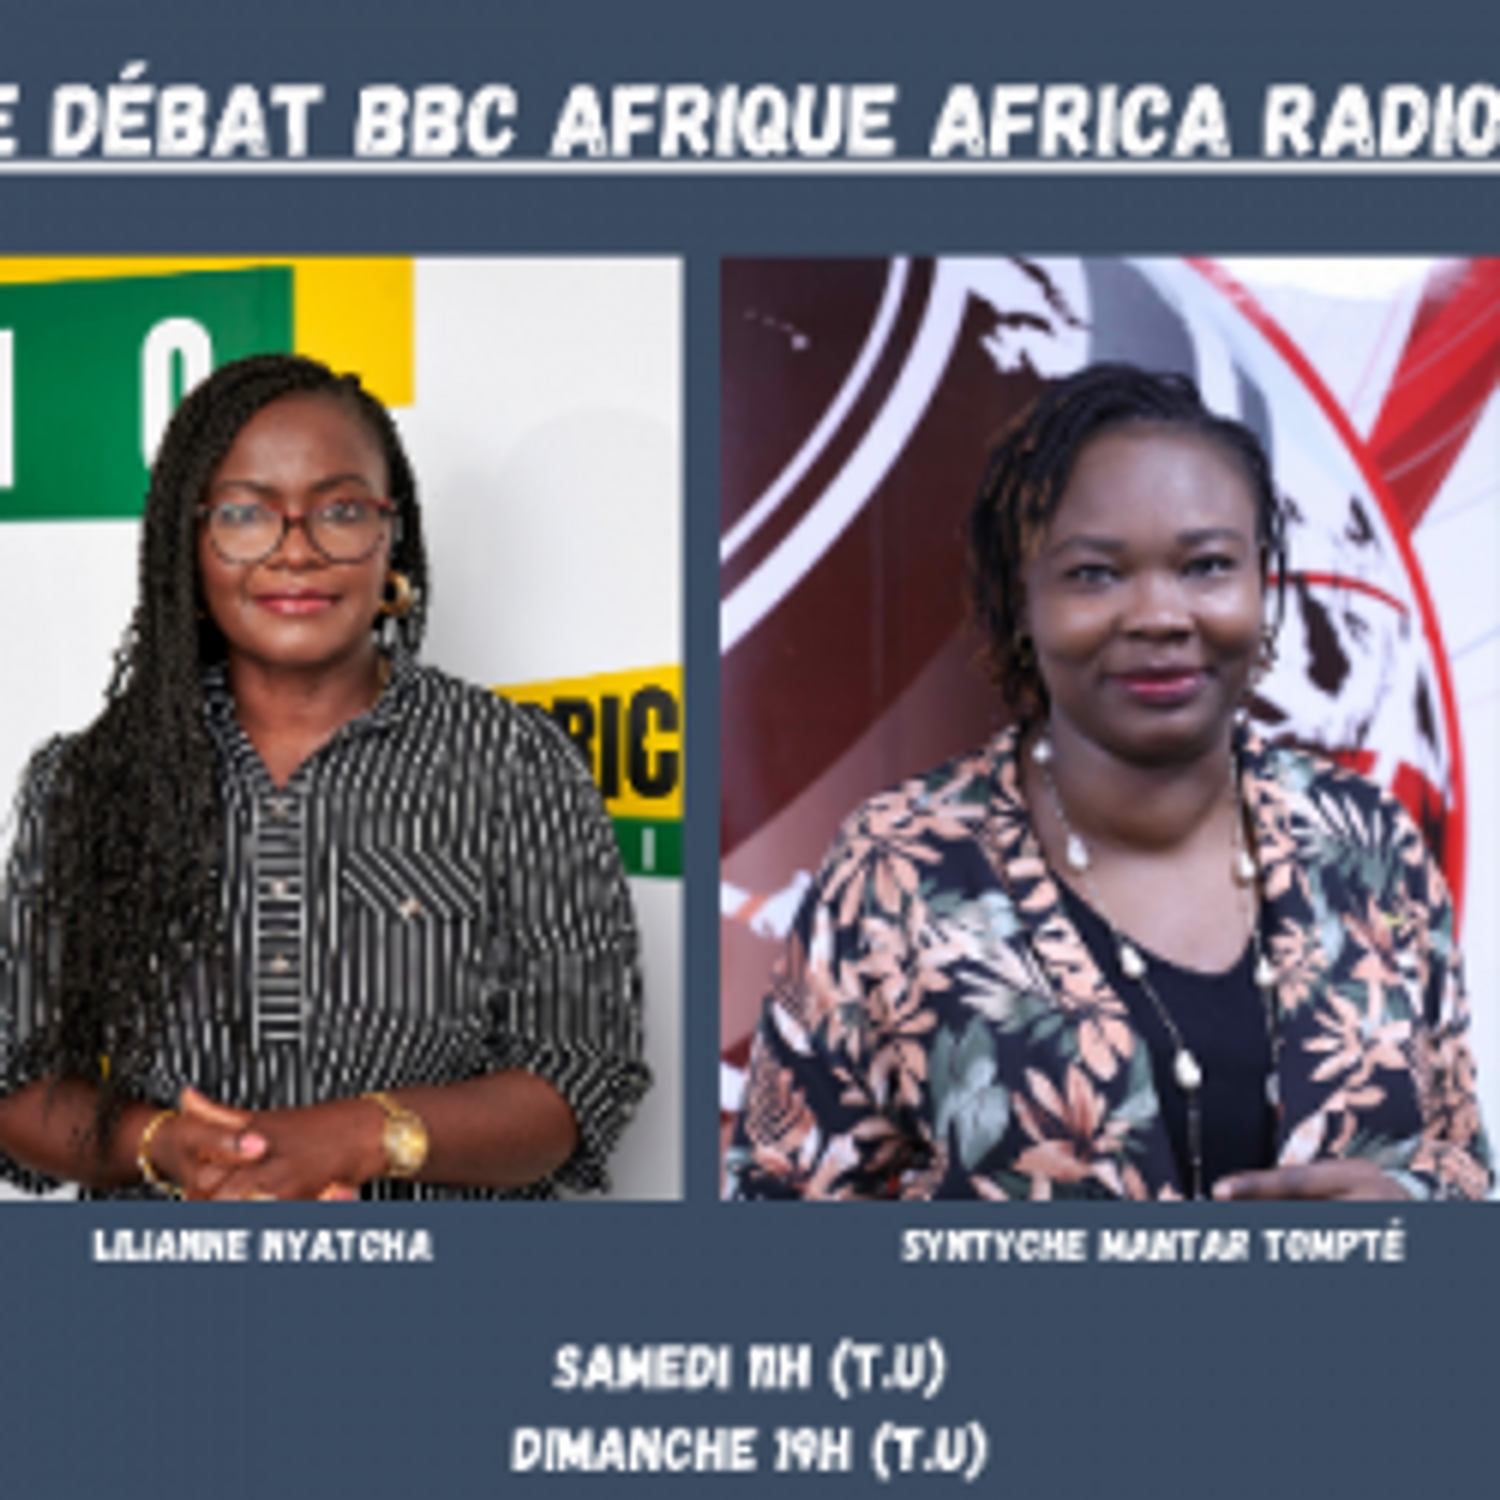 Le Débat BBC Afrique - Africa Radio